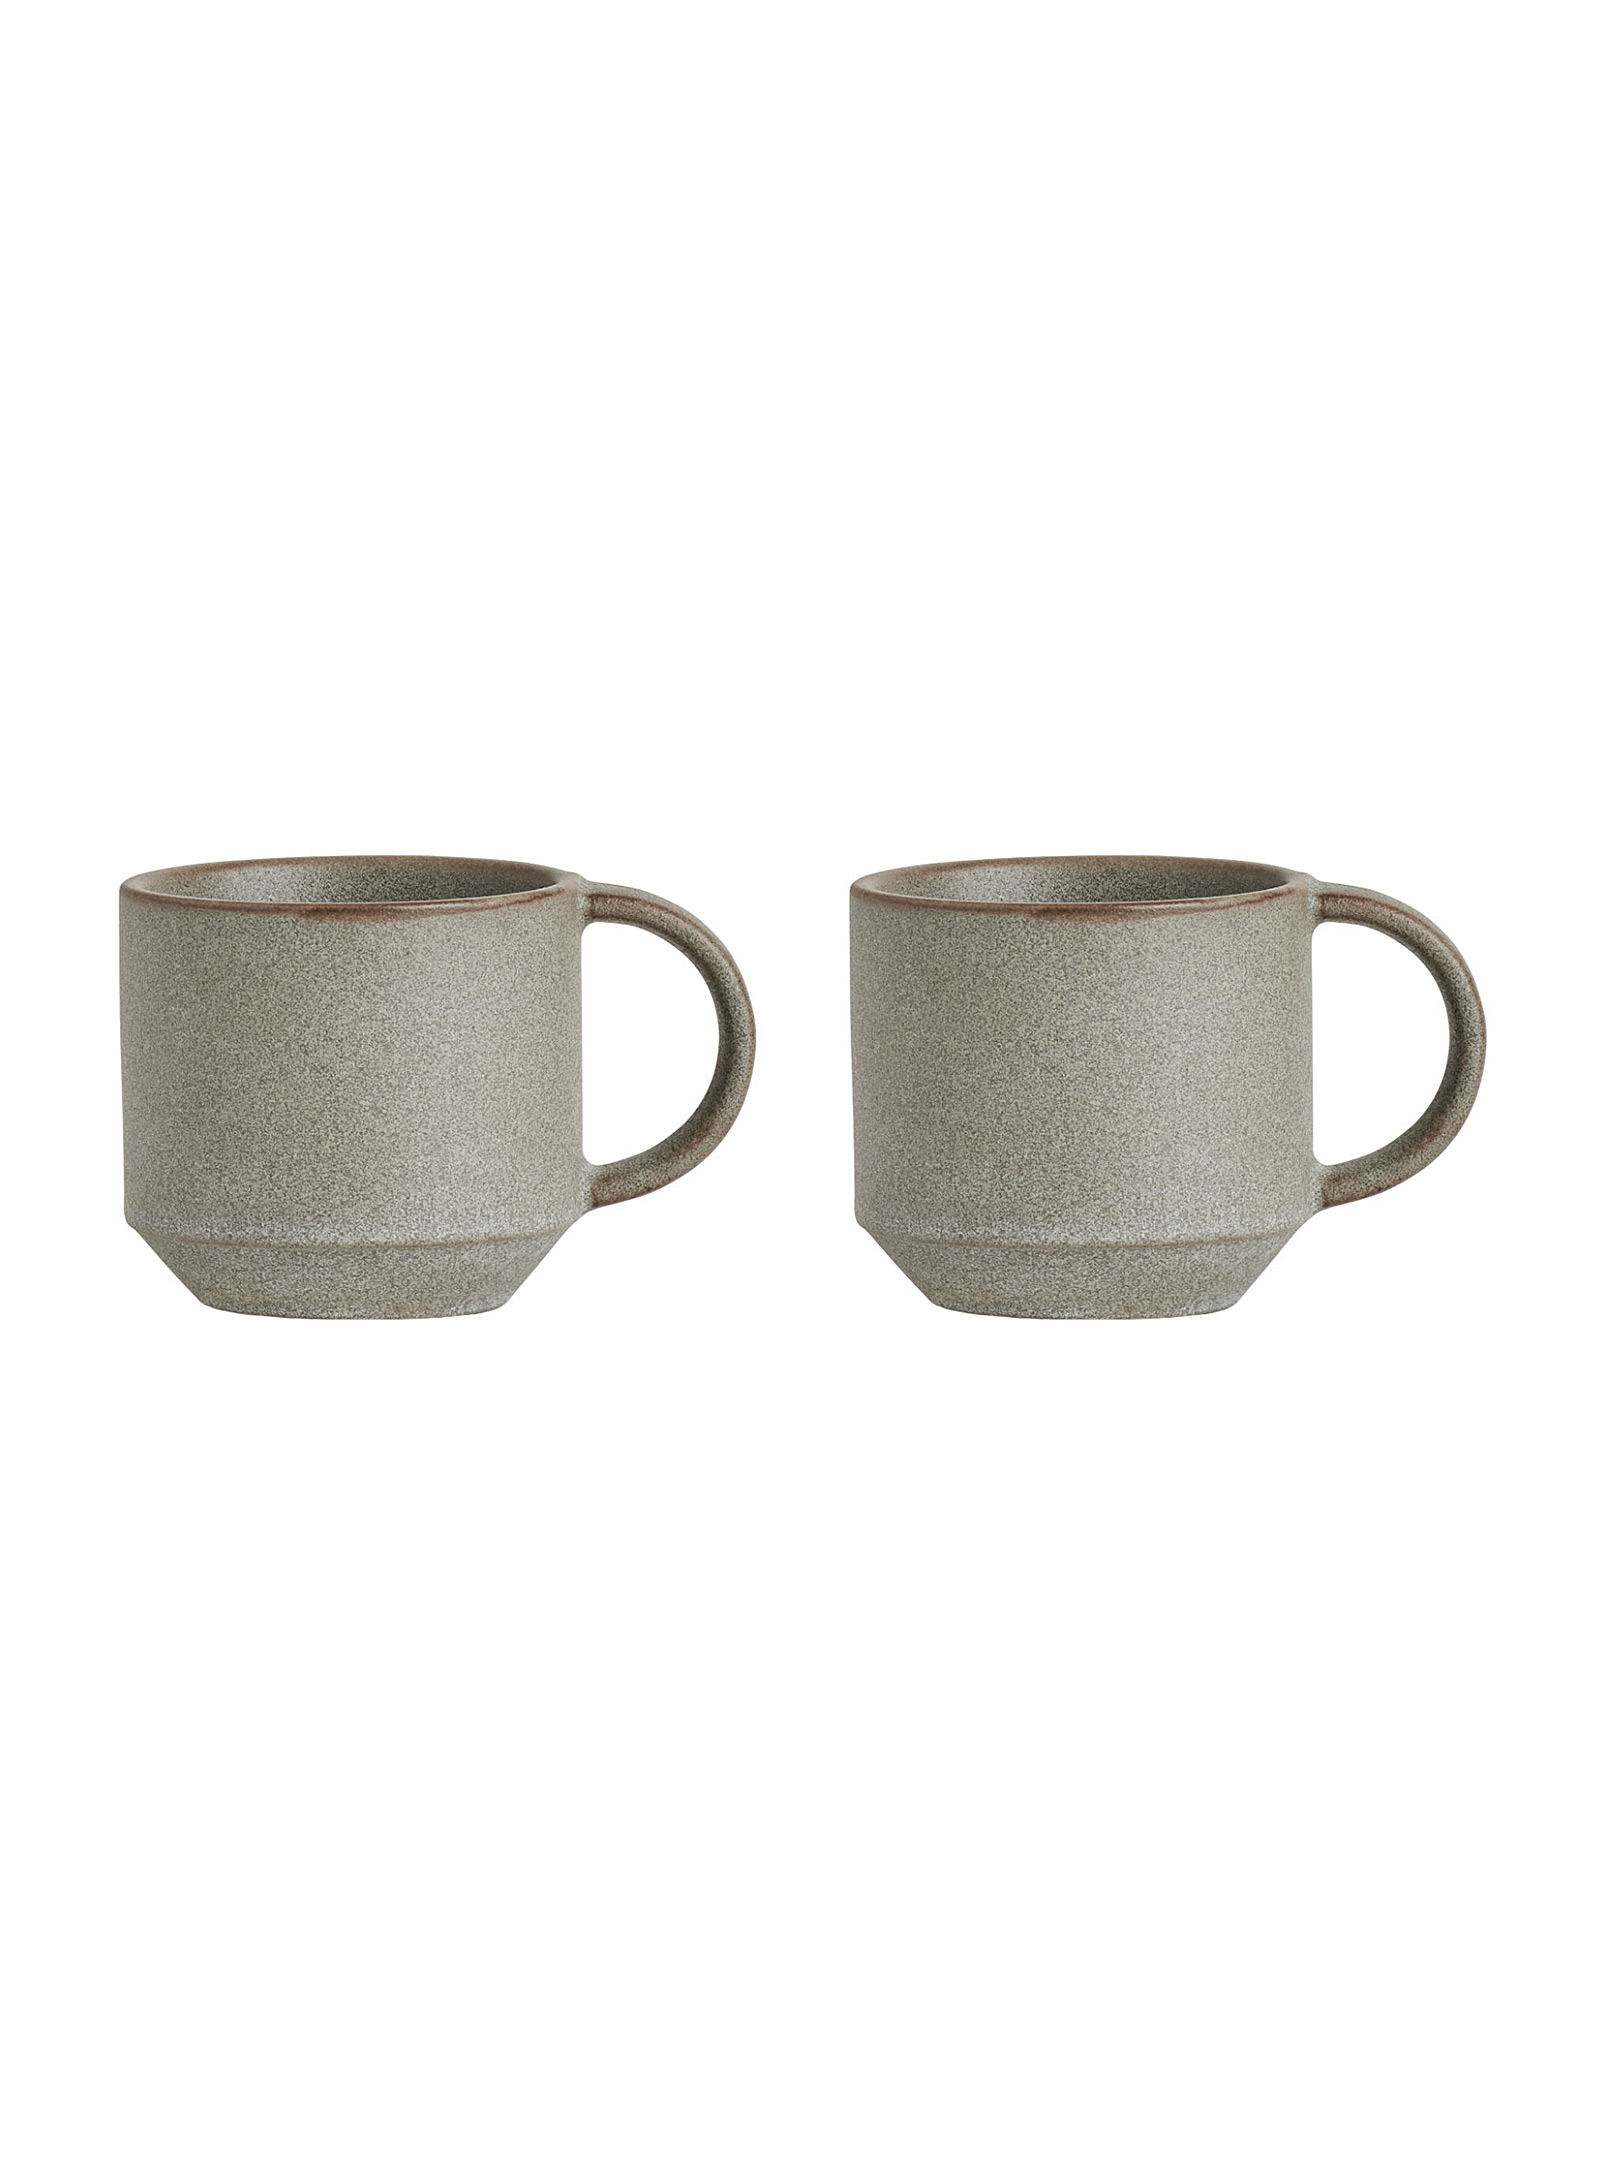 Oyoy Living Design Terracotta Geometric Artisanal Cups Set Of 2 In Grey